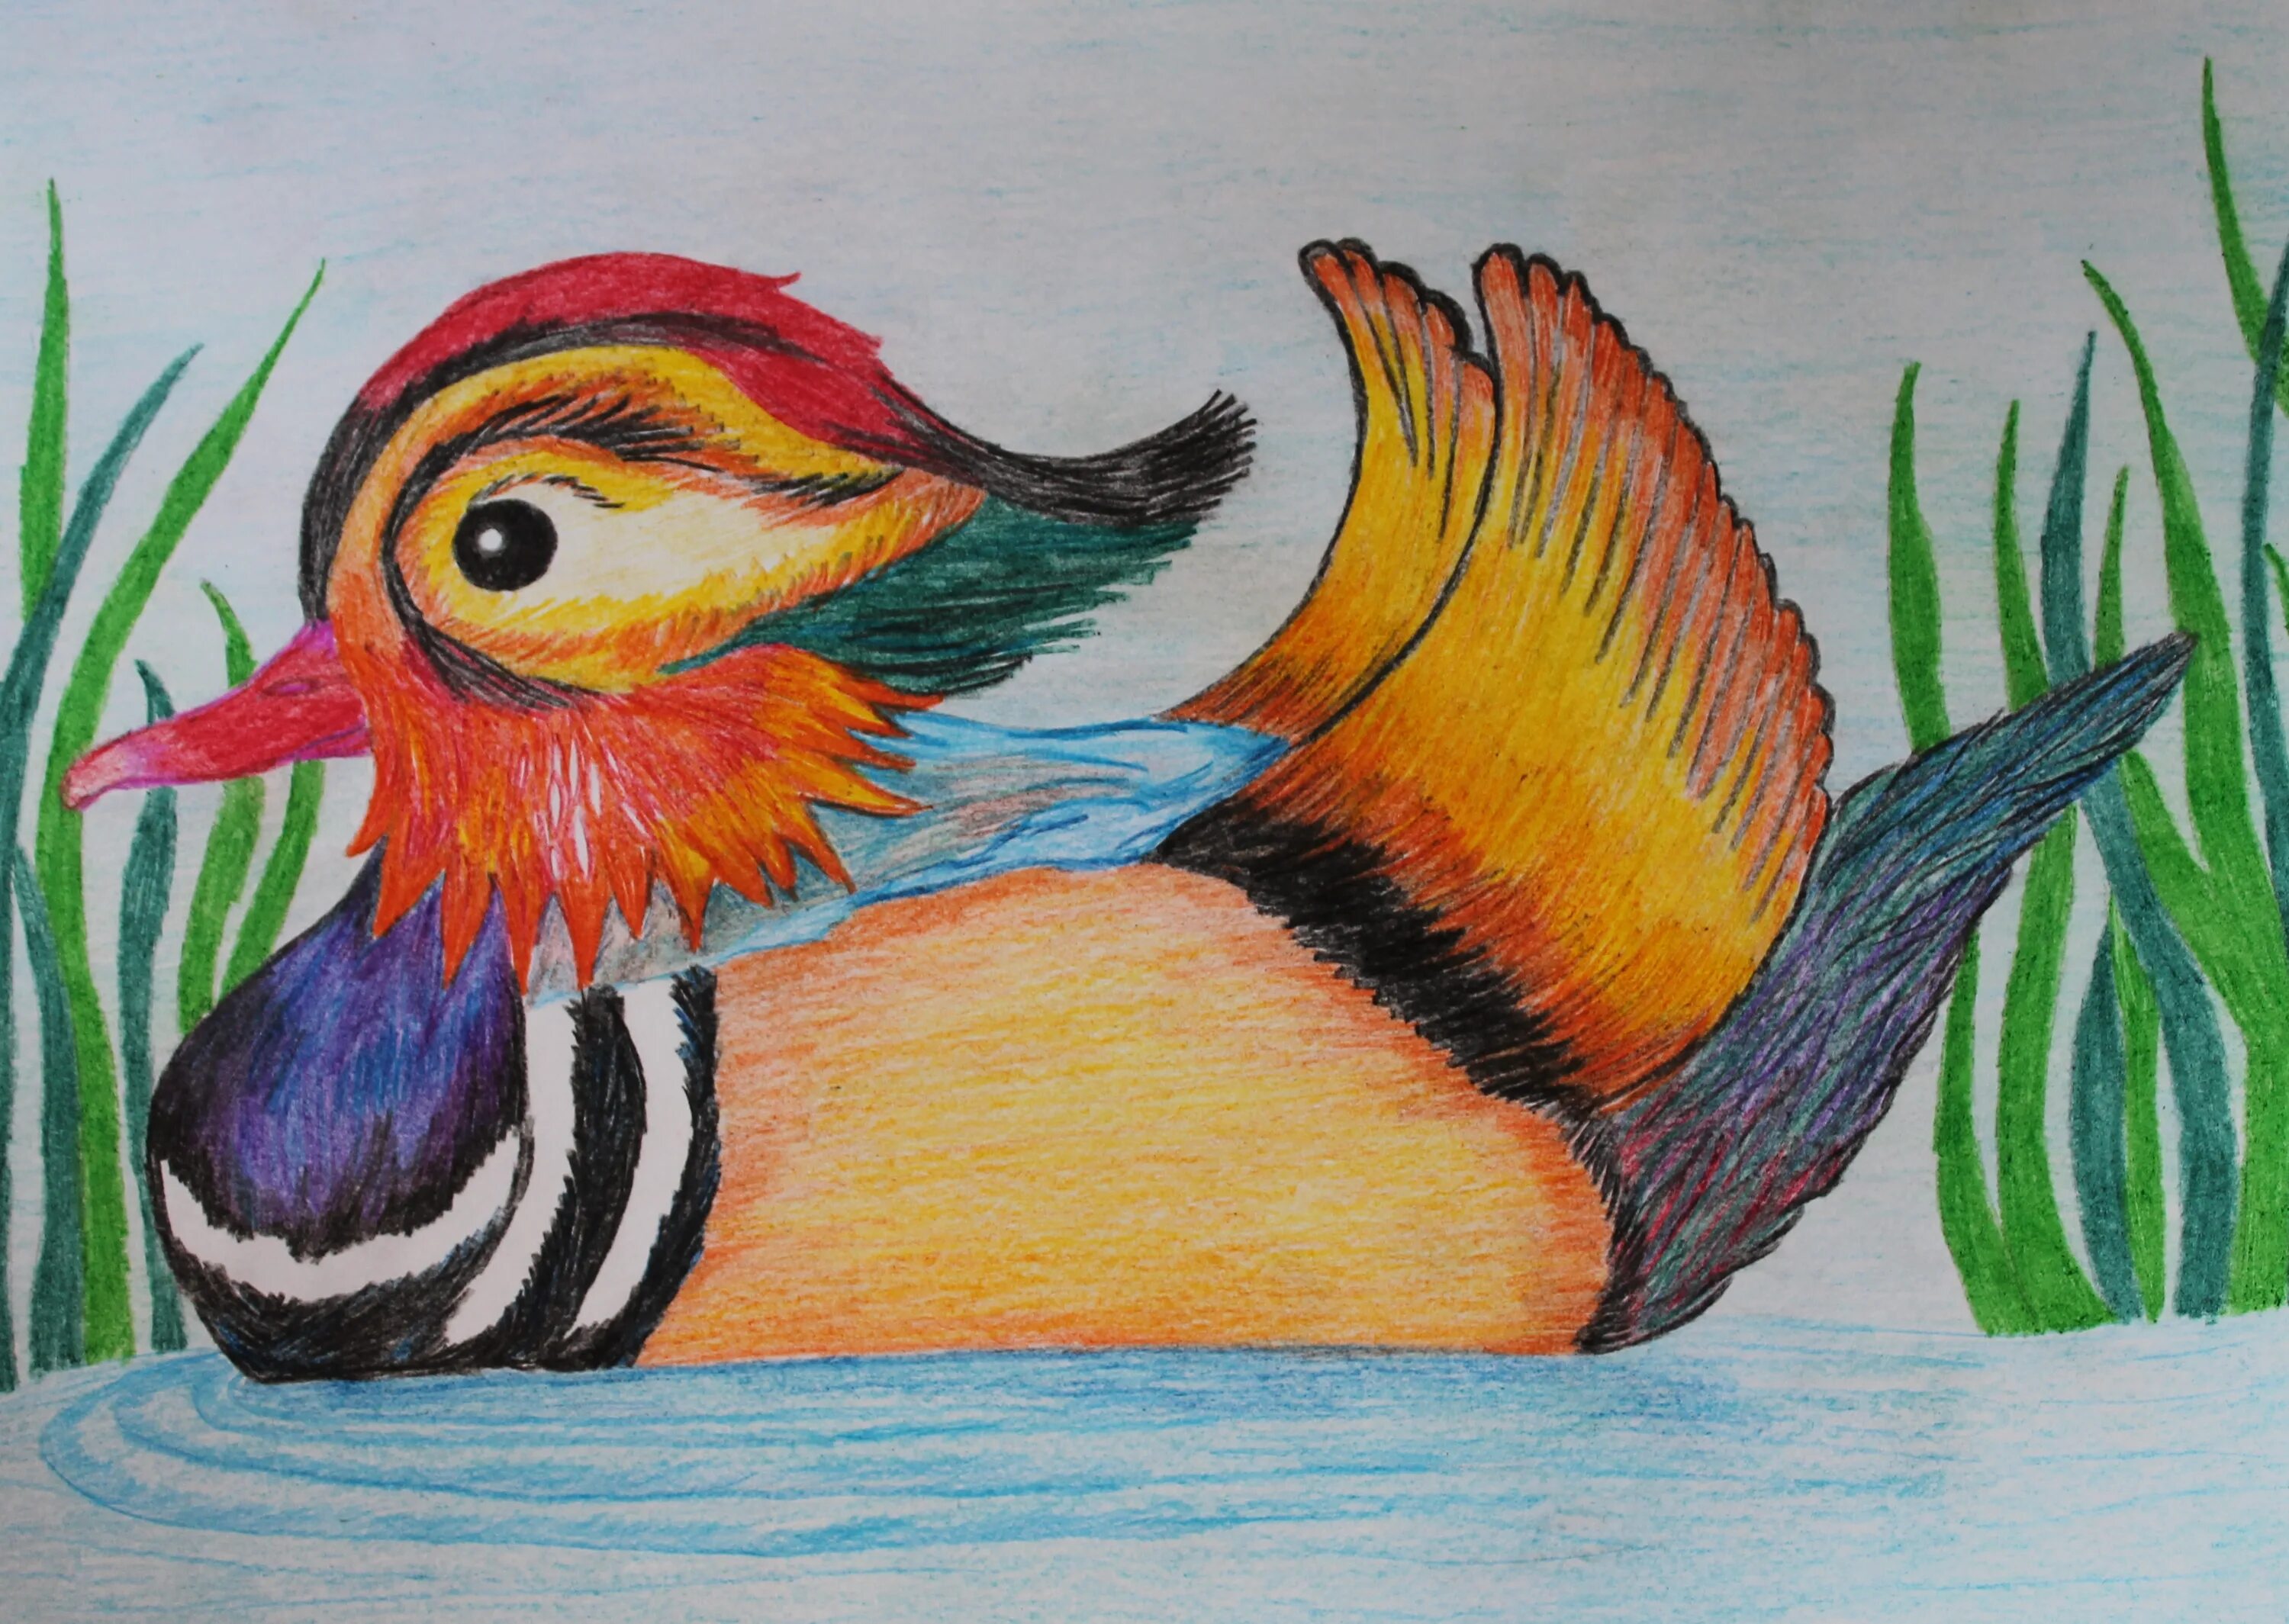 Irresistible mandarin duck coloring book for kids